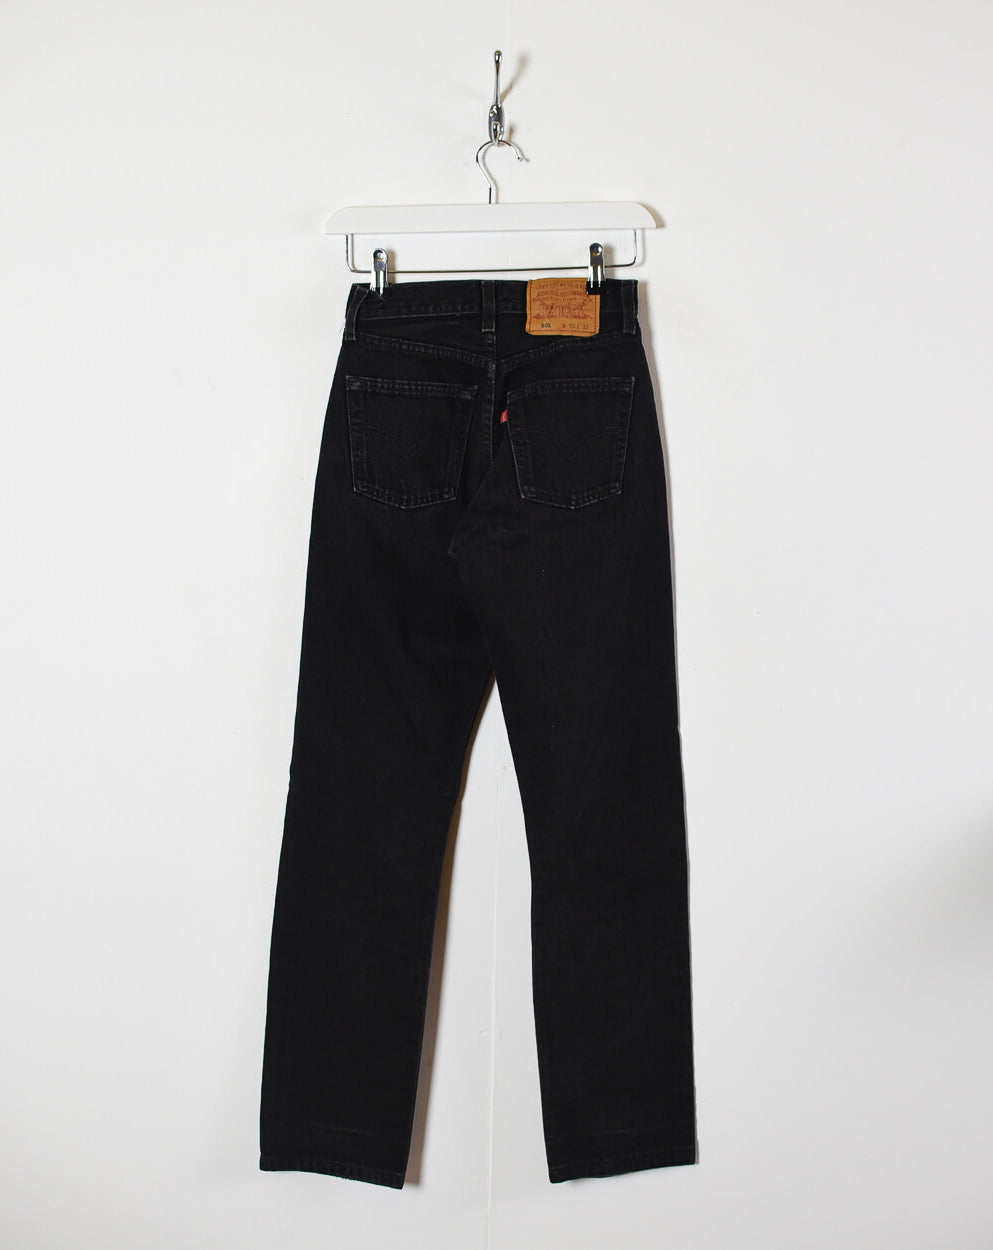 Black Levi's Jeans - W25 L31